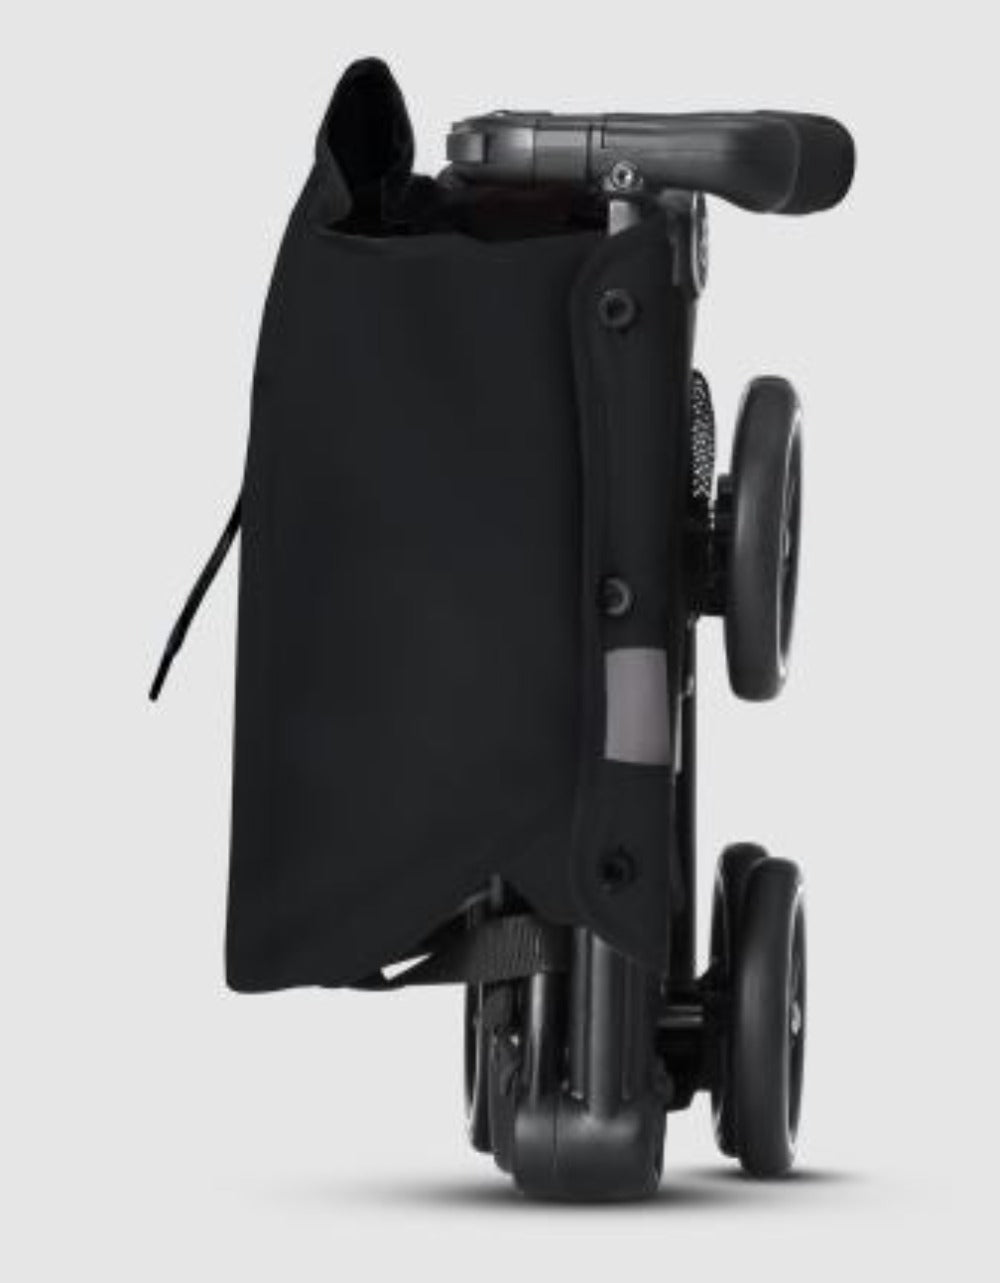 GB Pockit+ All-Terrain Compact Lightweight Stroller – mtrendi